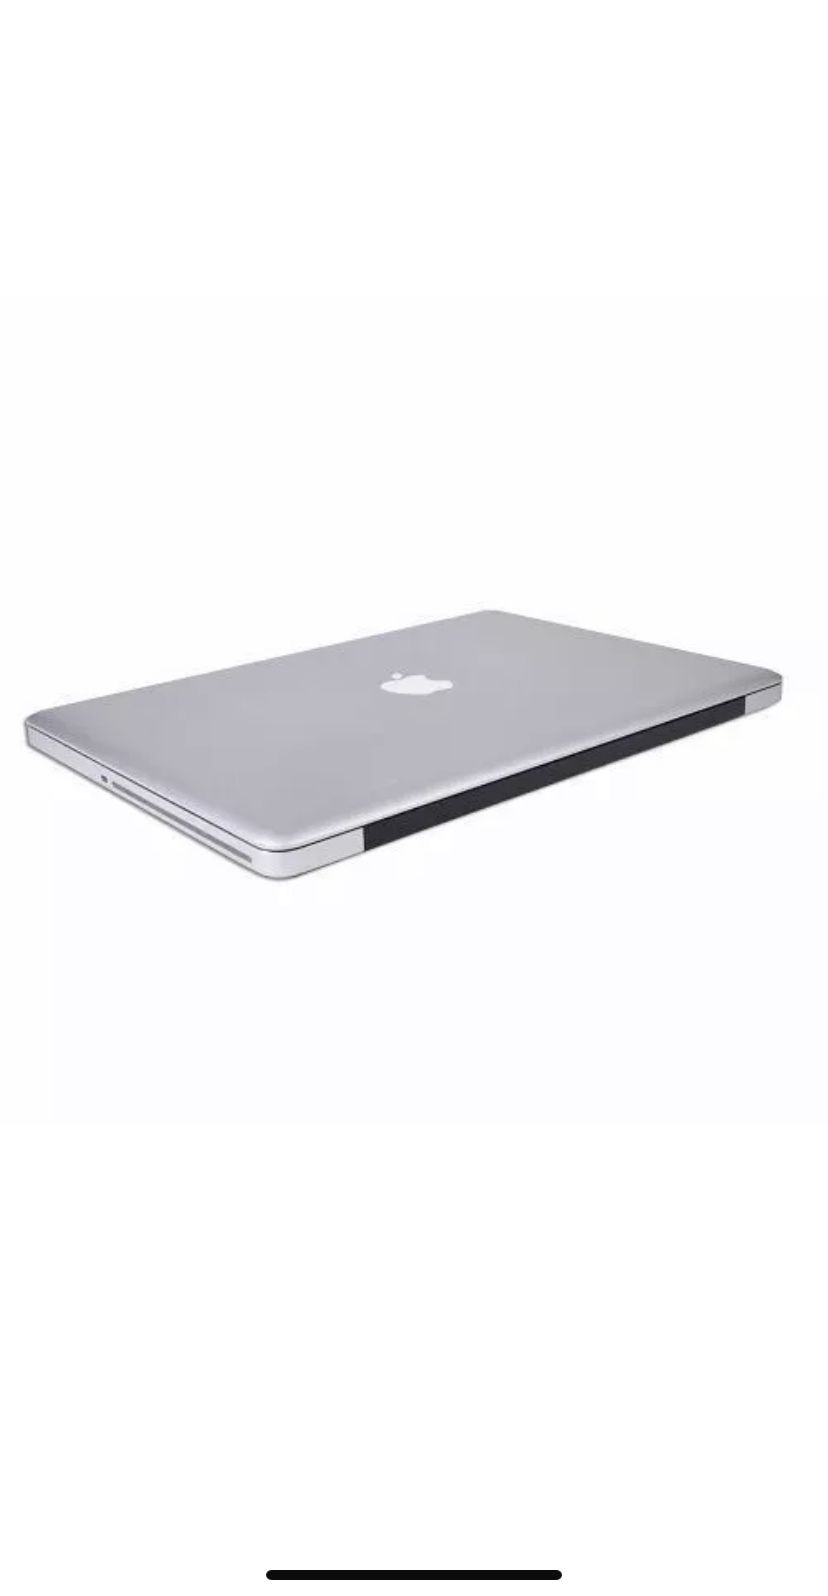 Apple Notebook MacBook Pro 15-inch Intel 2.53GHz 4GB Memory 500GB HDD Yosemite MC118